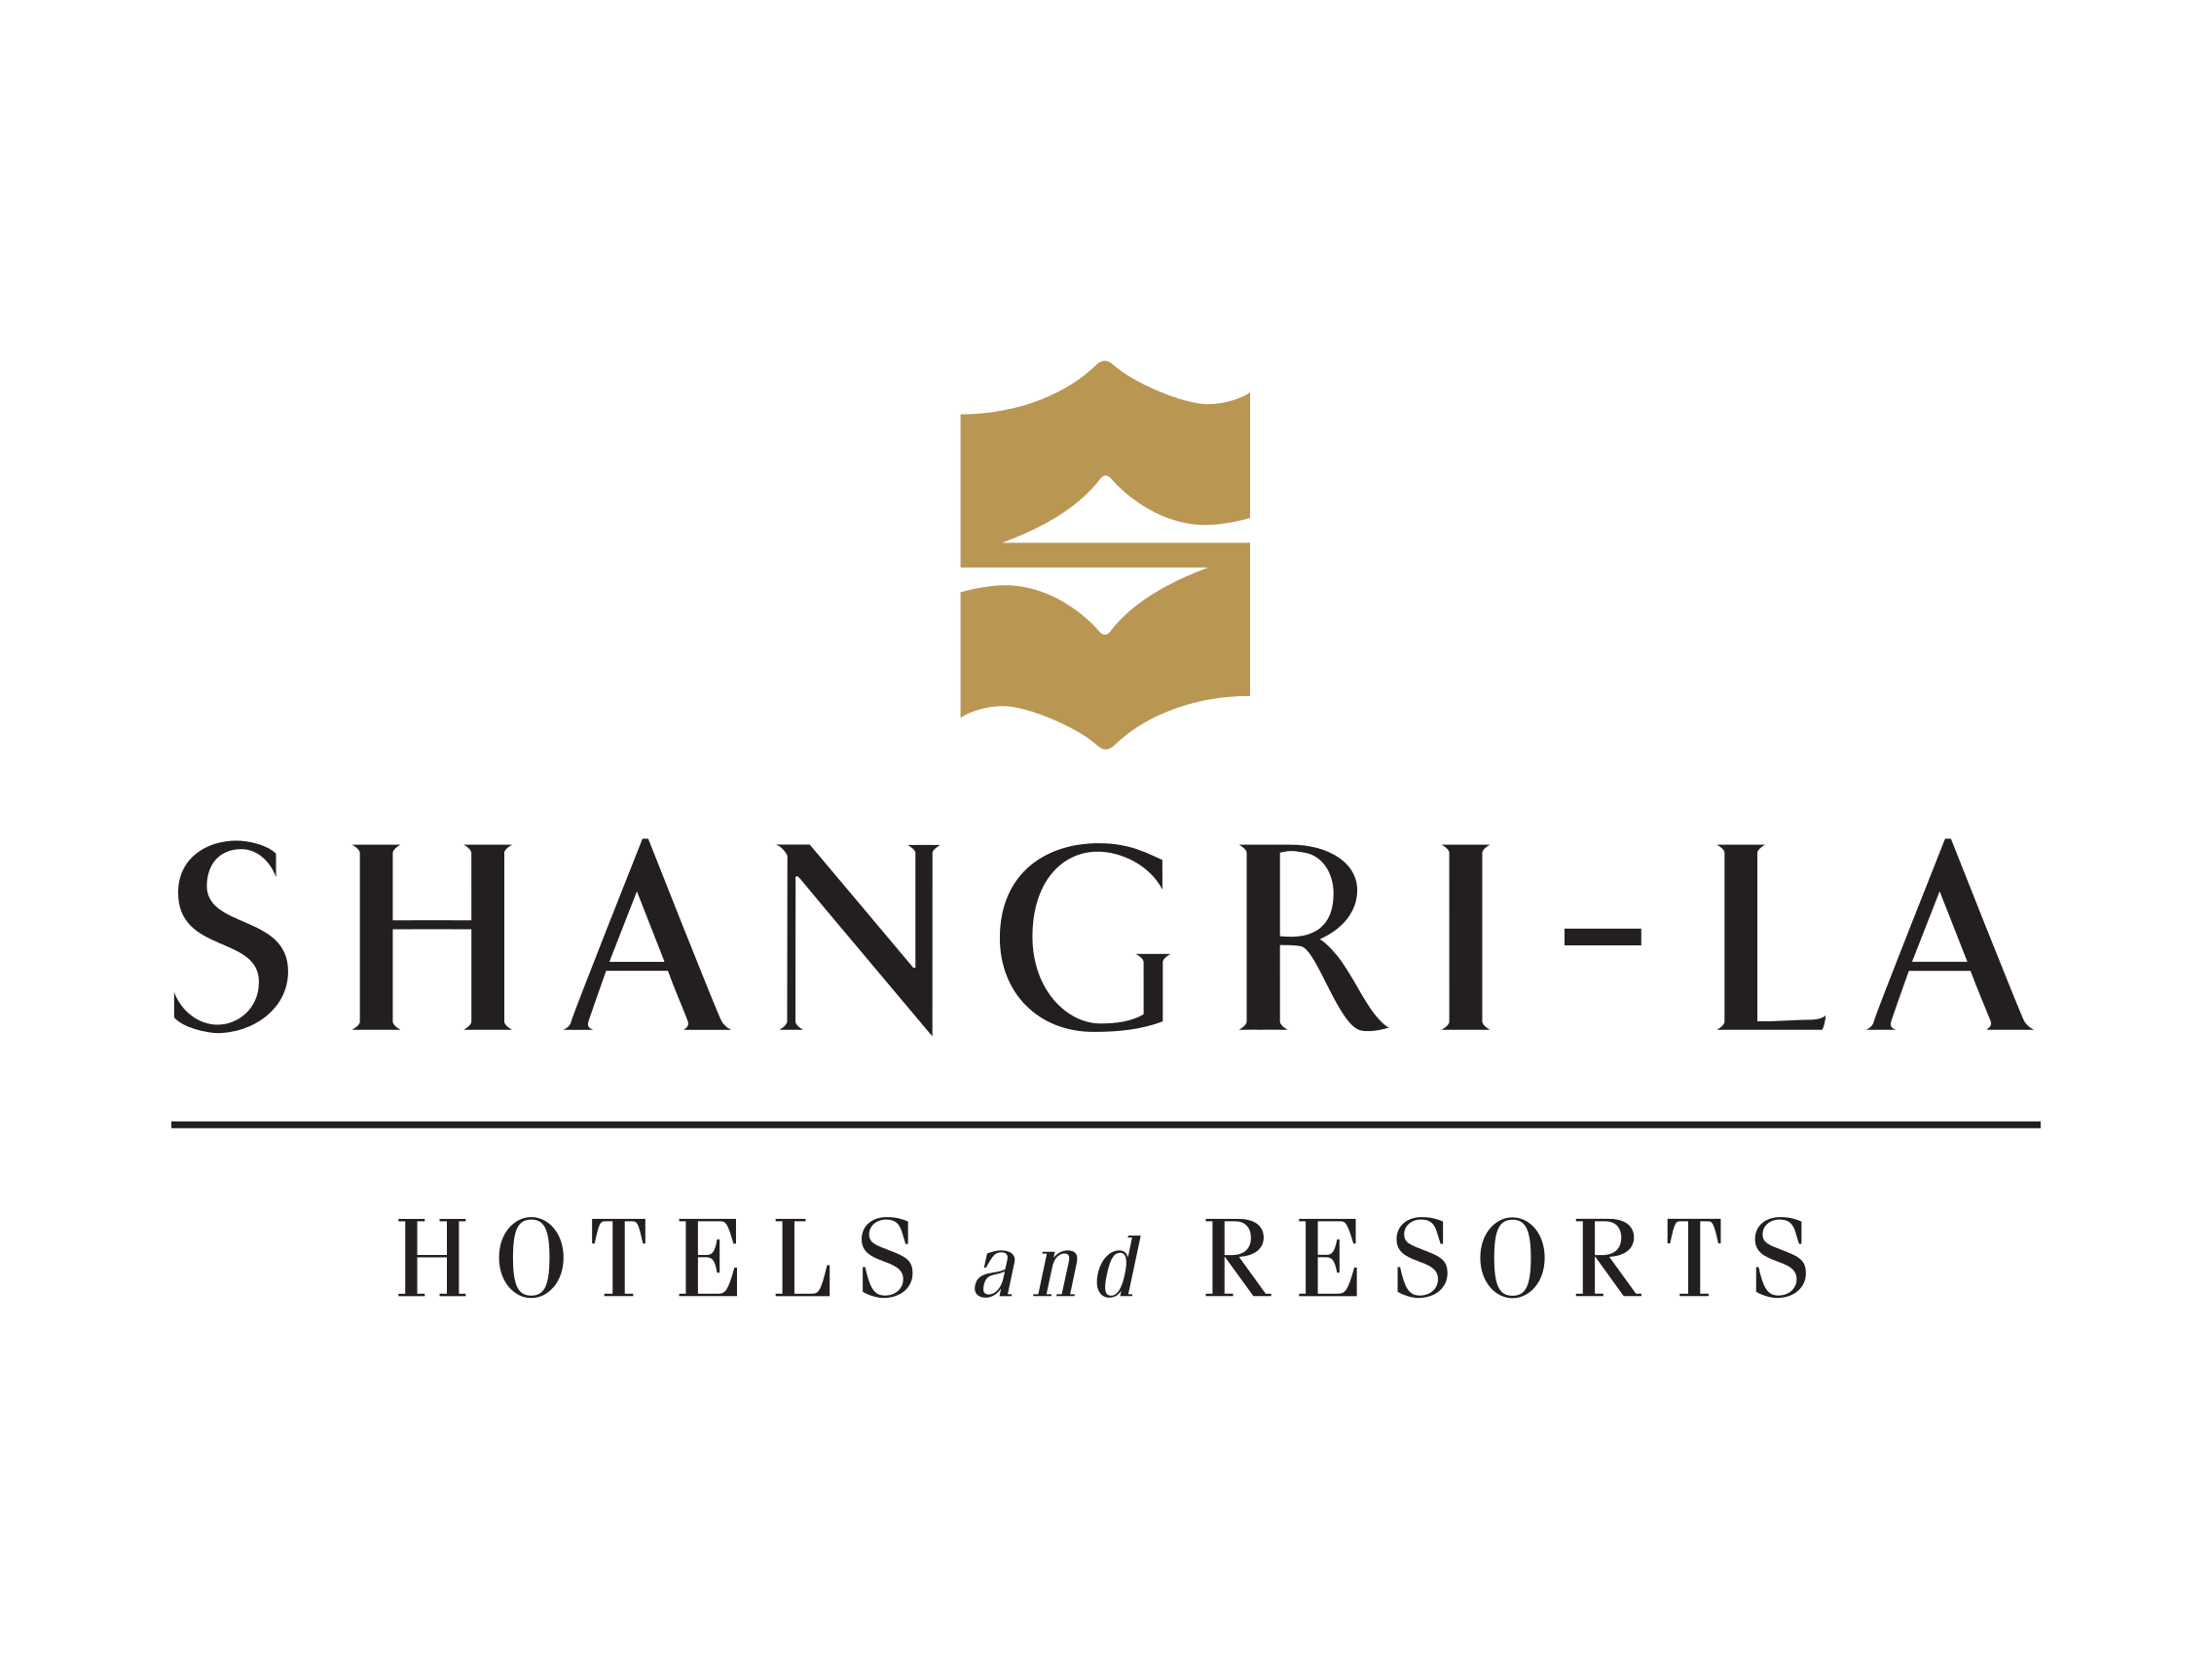 Shangri-la hotel logo transparent png #41801